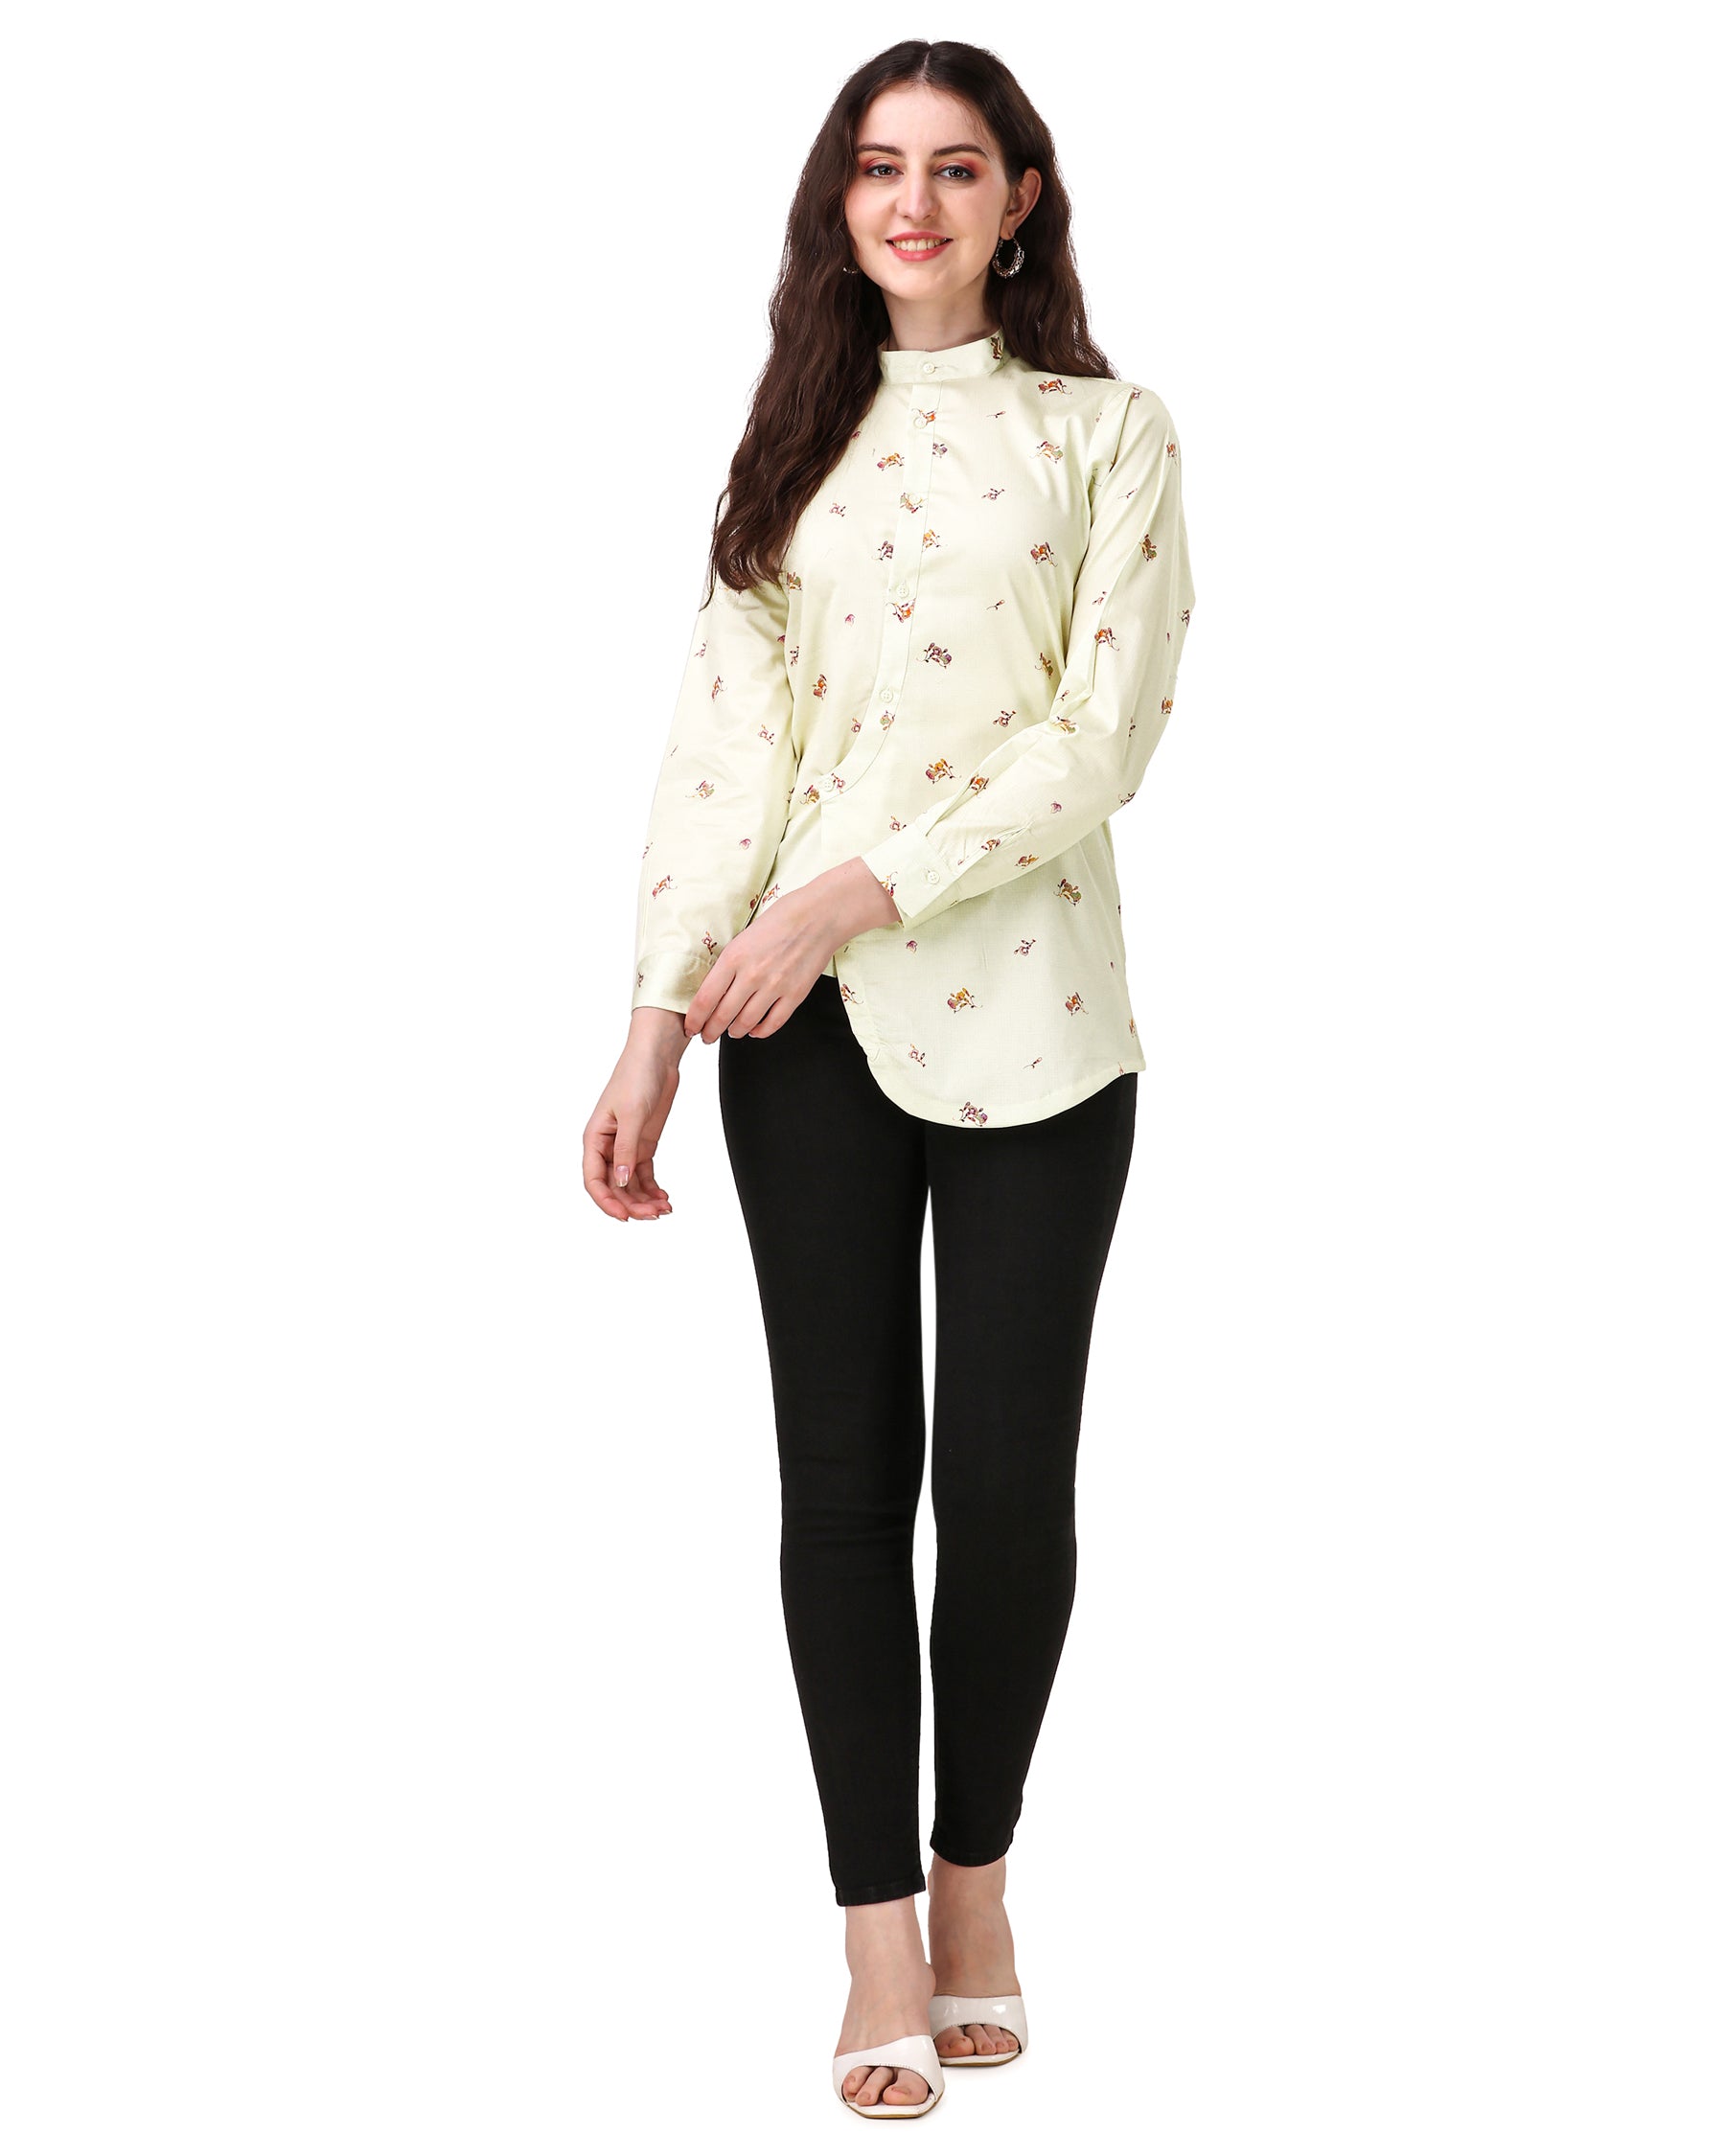 Merino Beige Printed Super Soft Premium Cotton Women’s Shirt